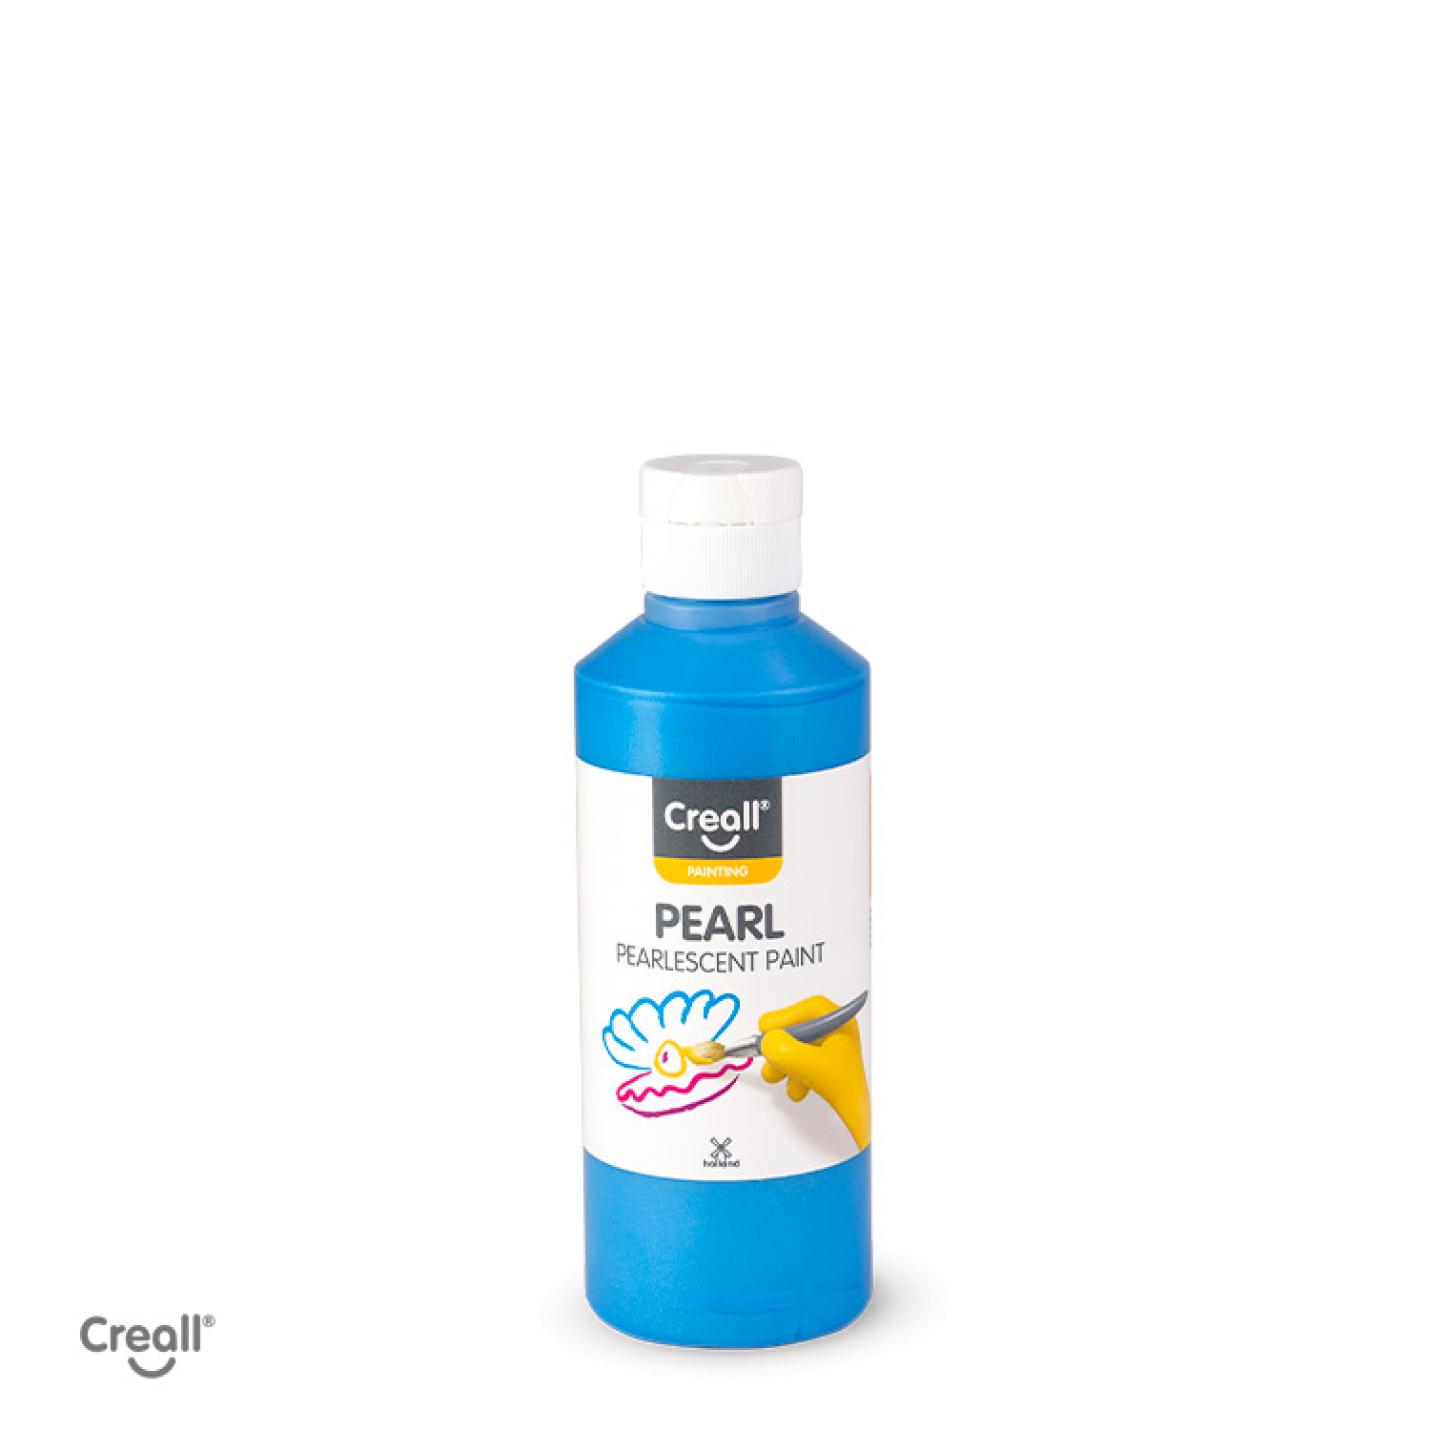 Creall Pearl 250ml parelmoerverf - blauw